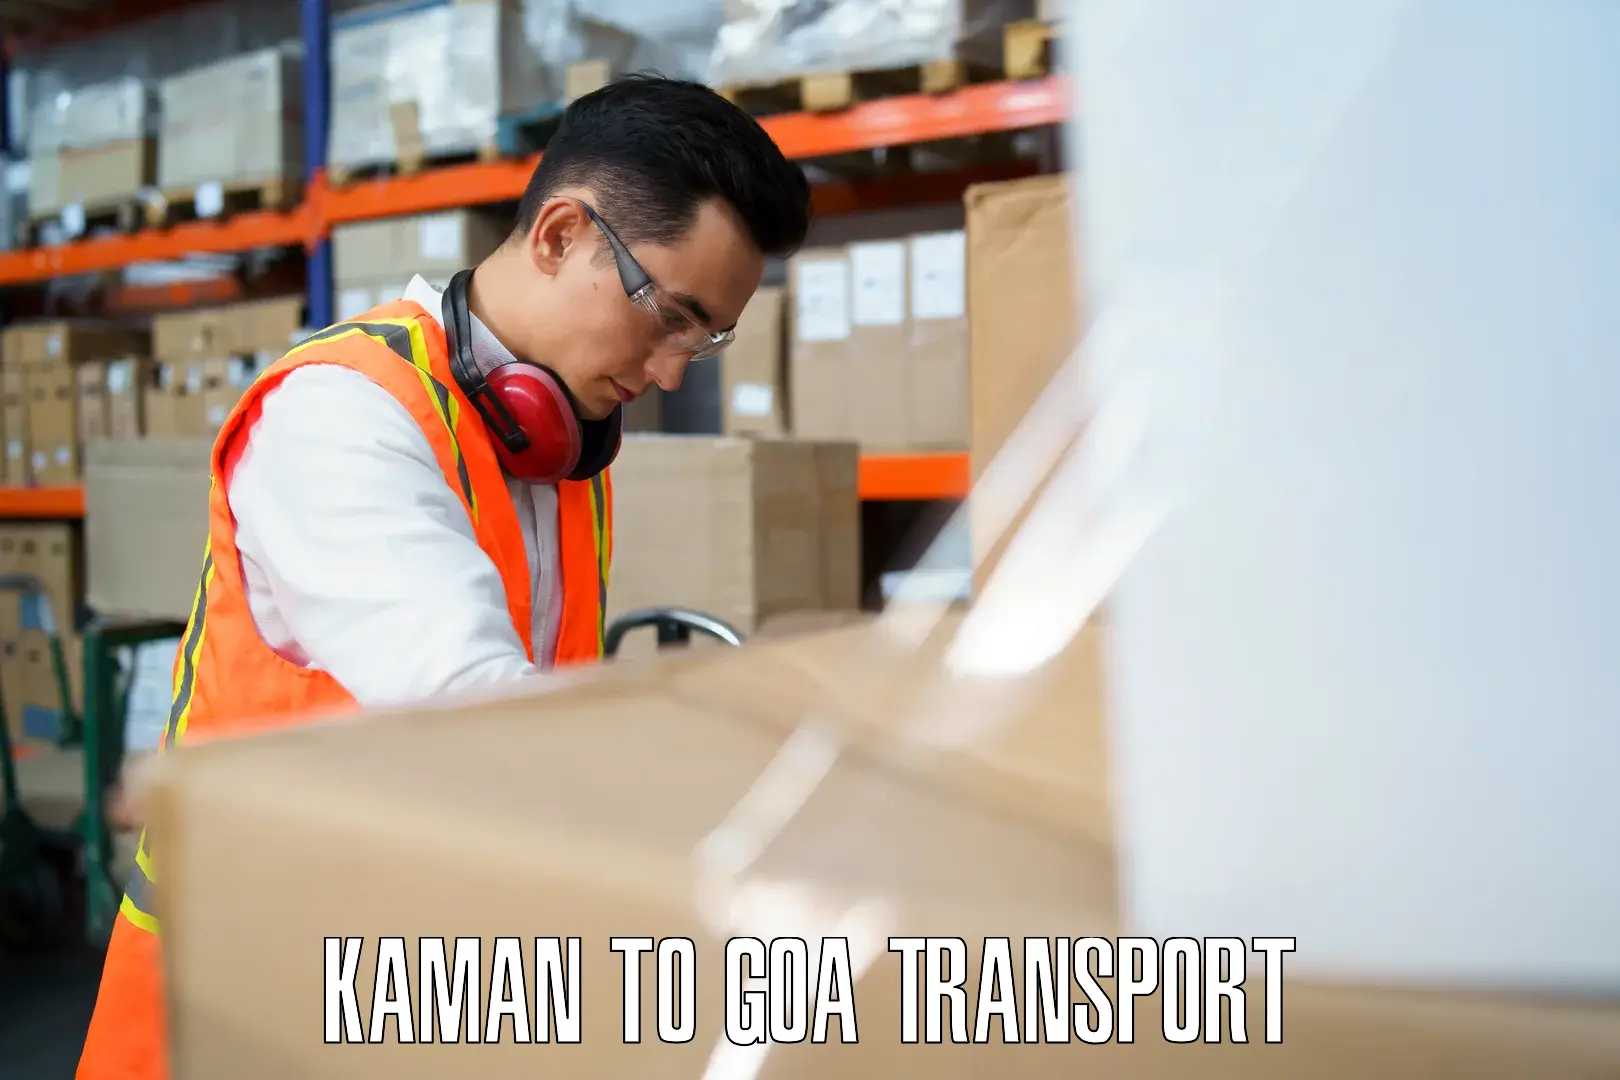 Transport in sharing Kaman to Goa